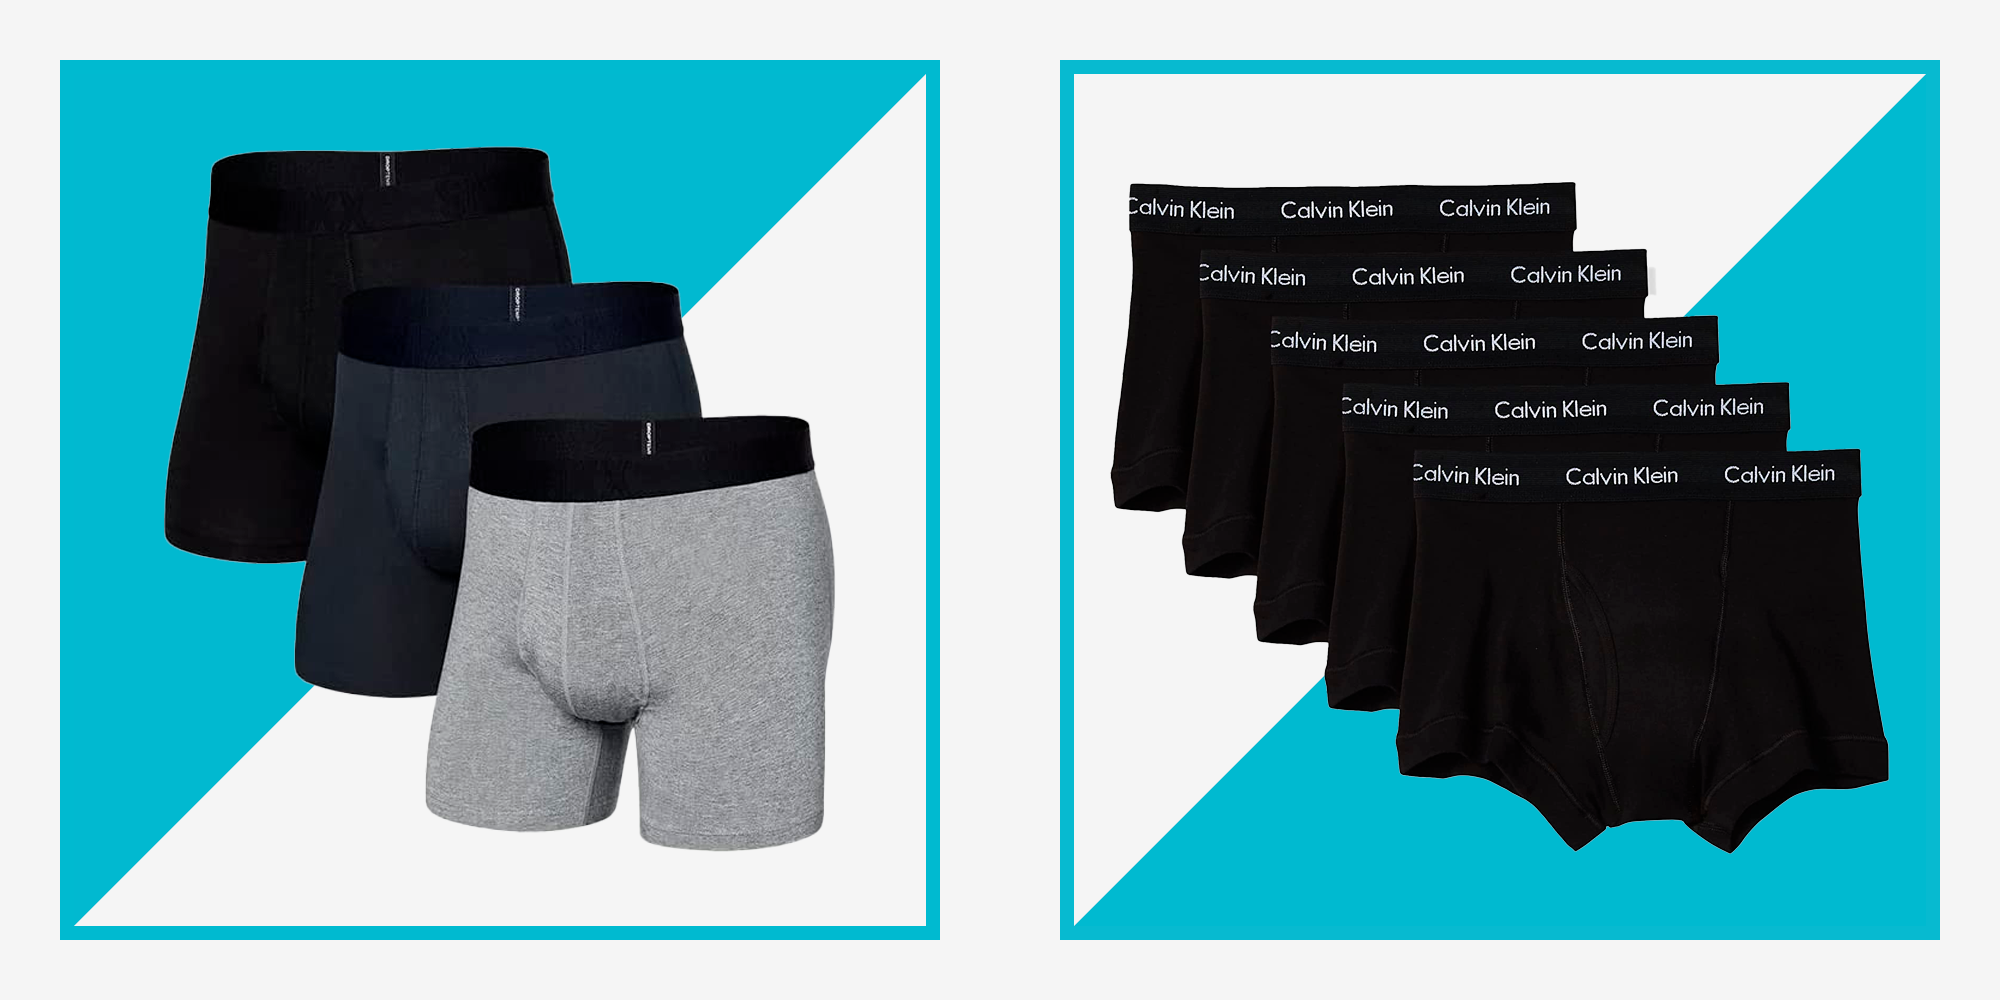 Men's Underwear Boxer Briefs (4 Pack) – BAMBOO COOL Apparel